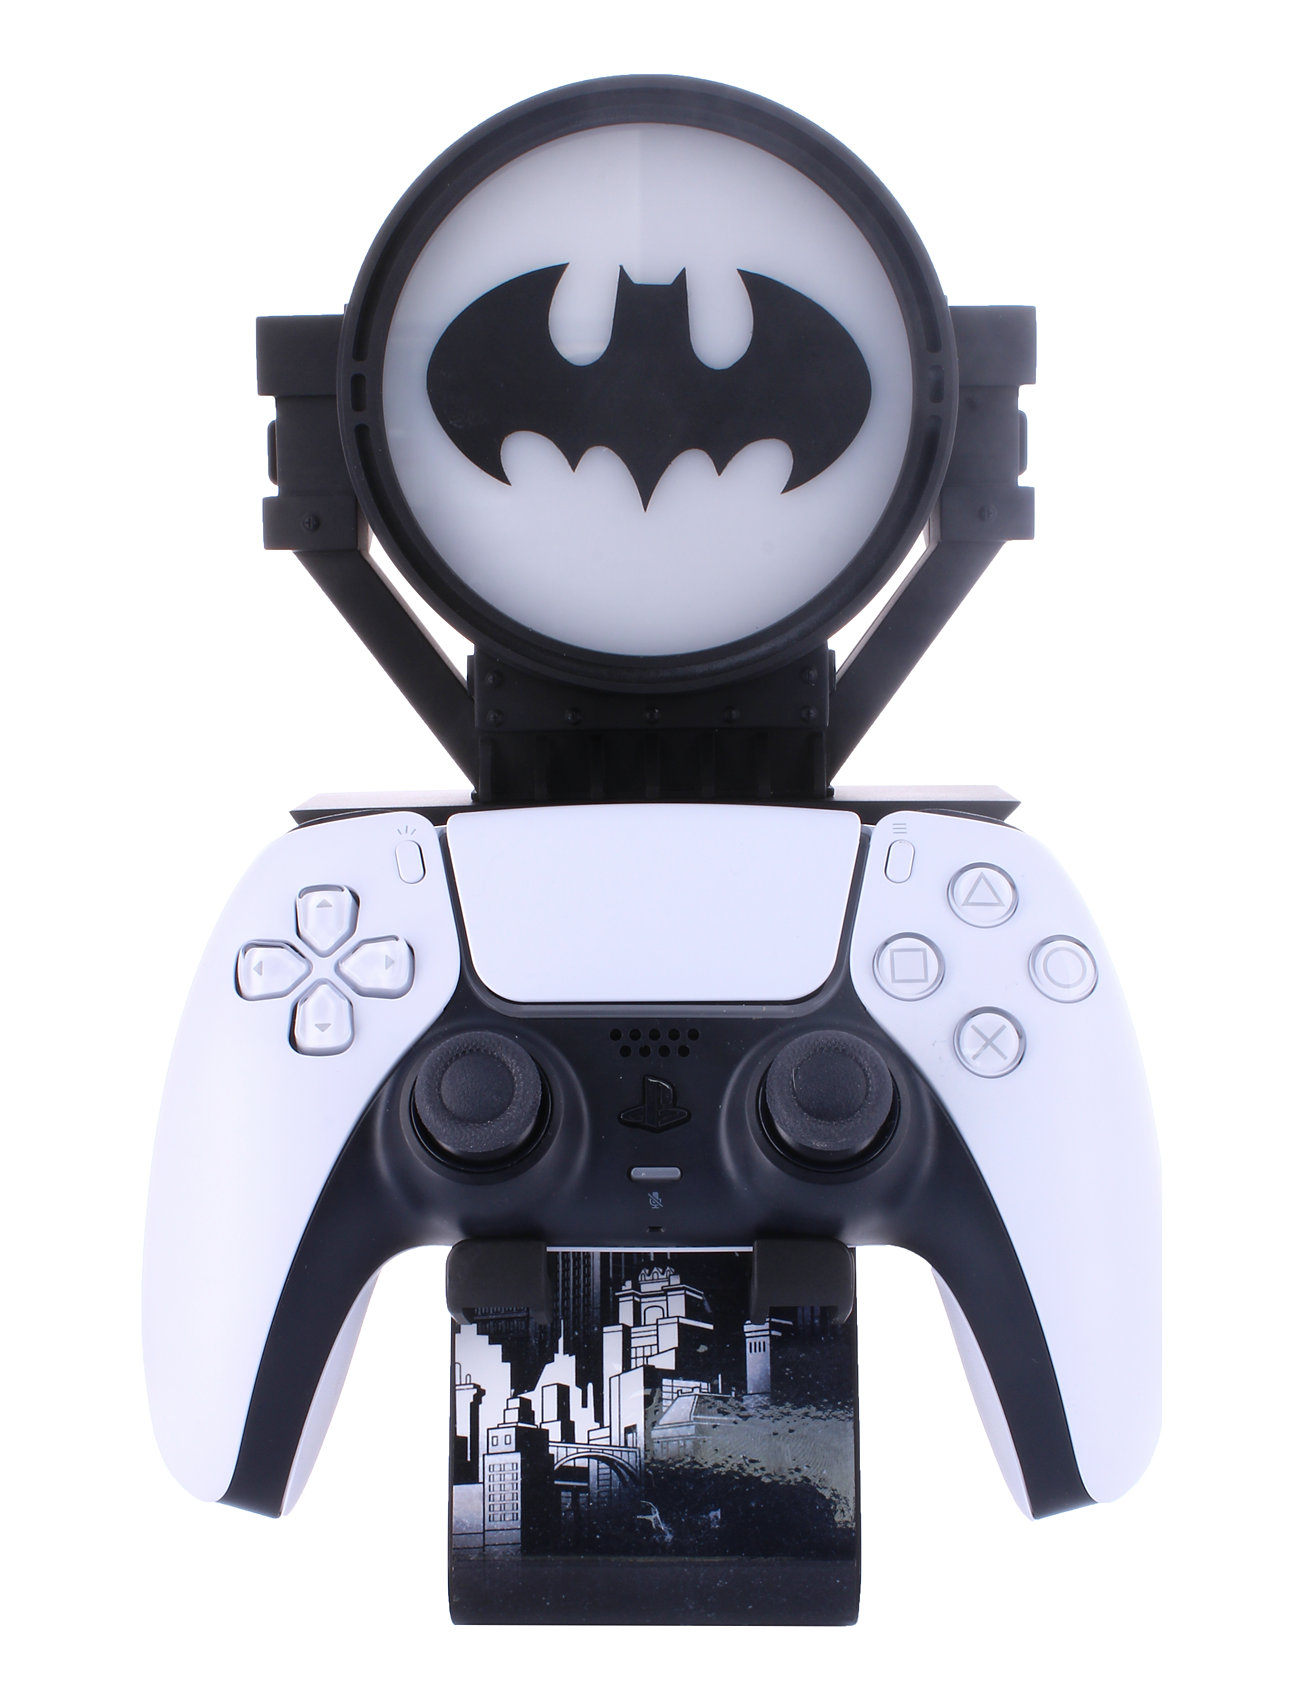 Cable Guys - Ikon - Batman Home Kids Decor Decoration Accessories-details Multi/patterned Cable Guy